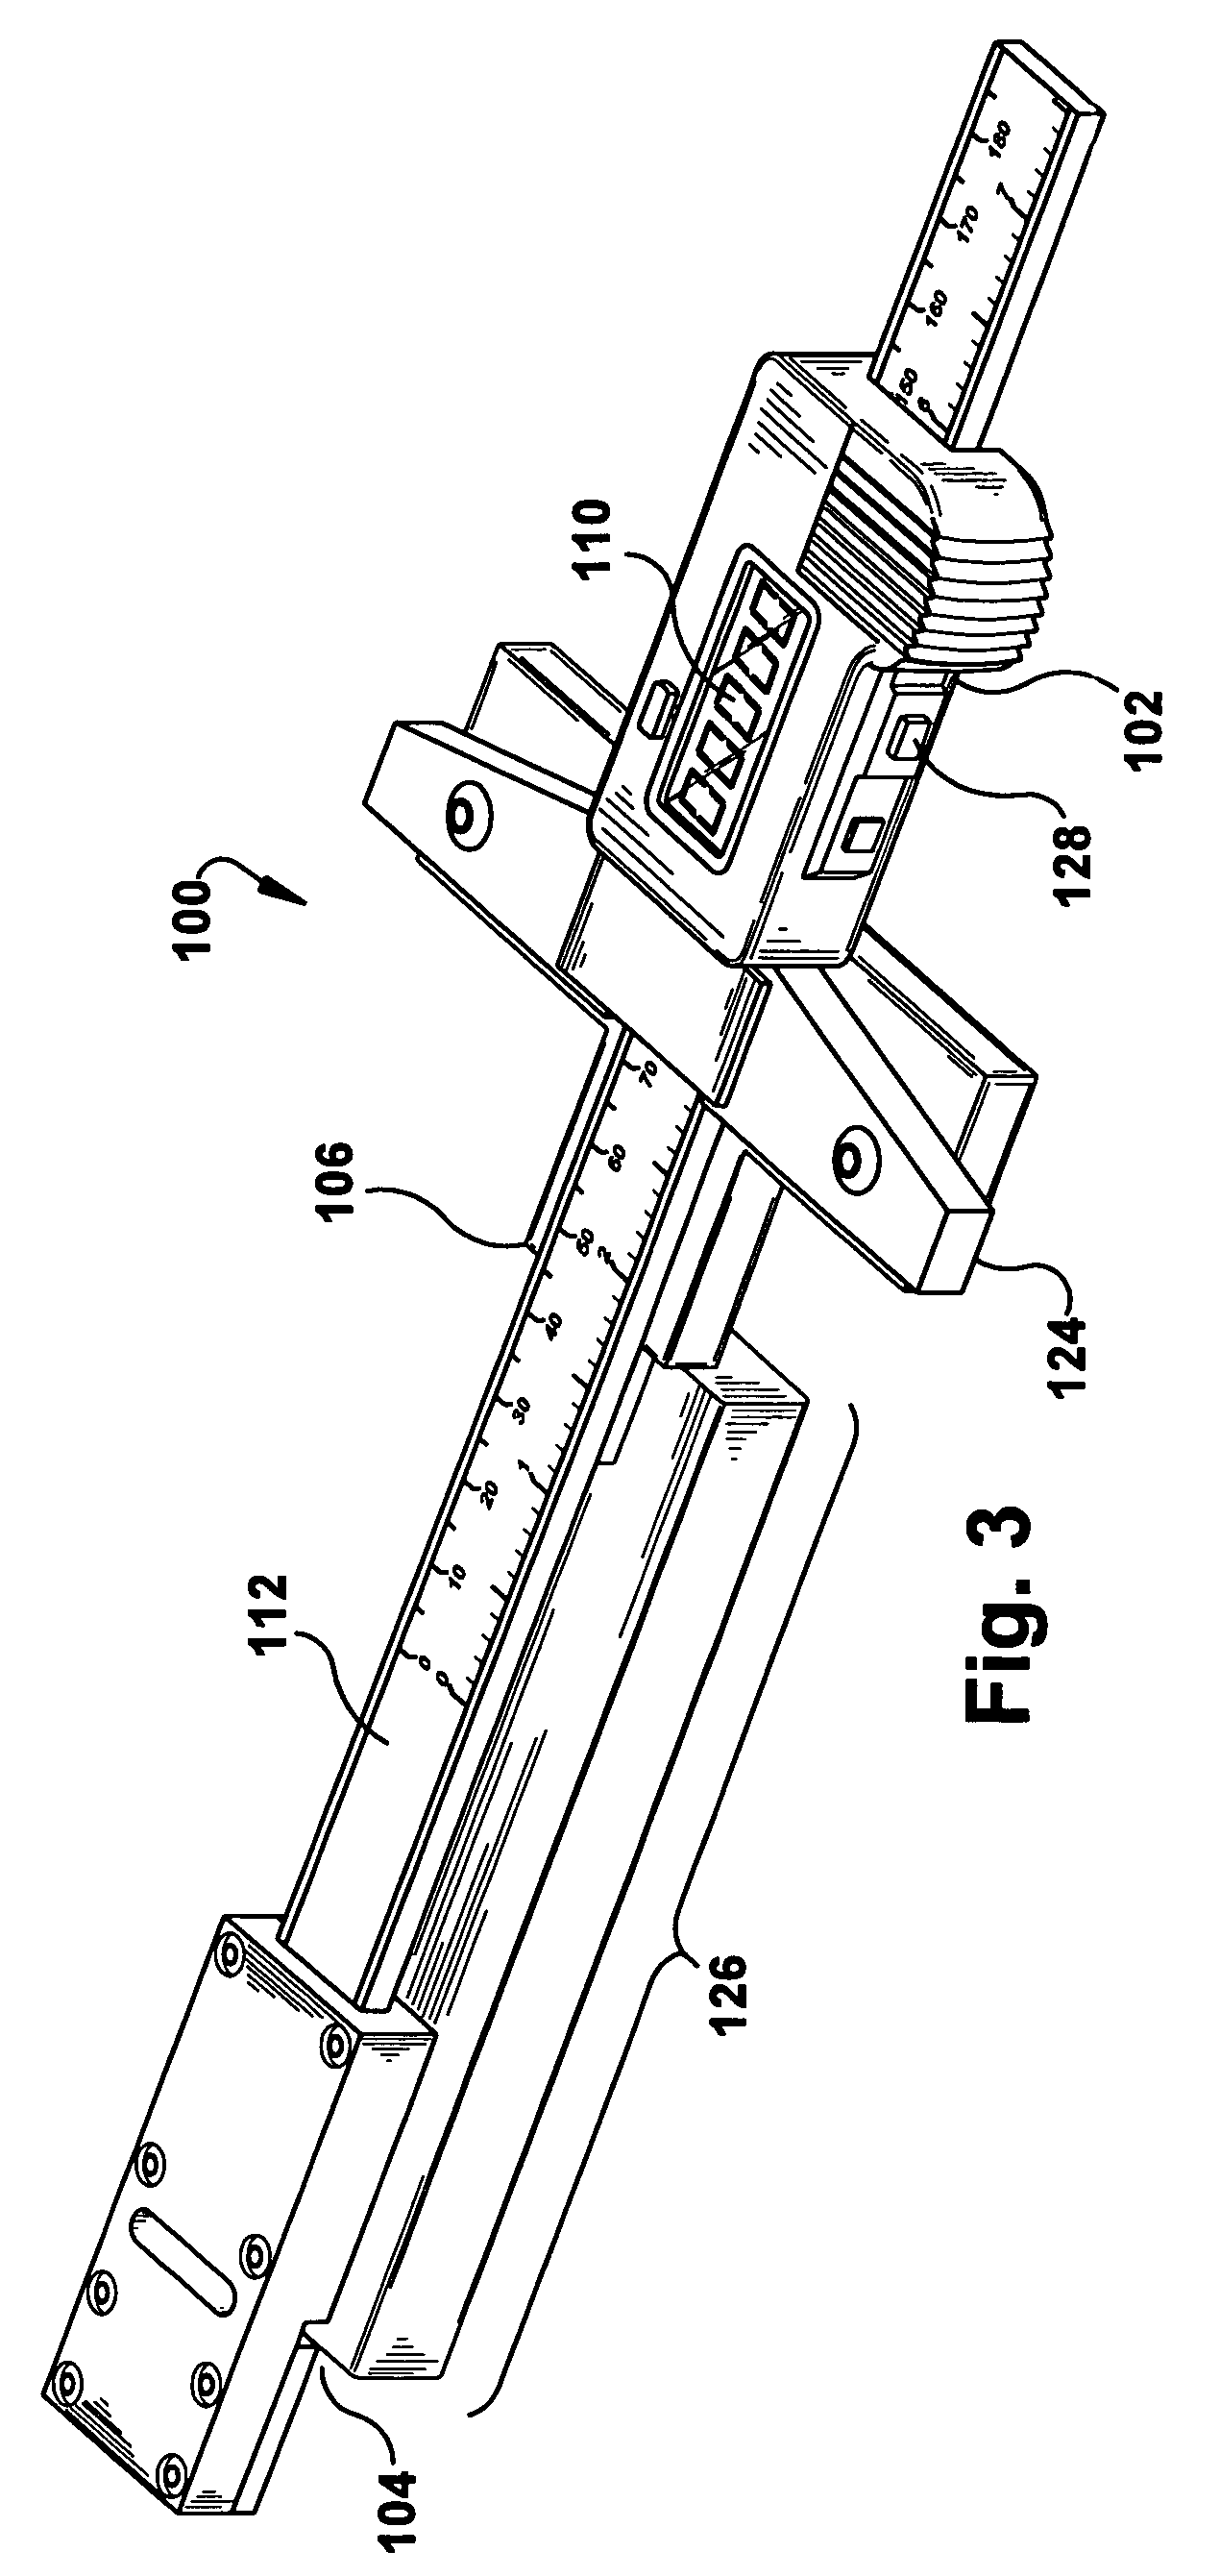 Apparatus for measuring a turbine blade